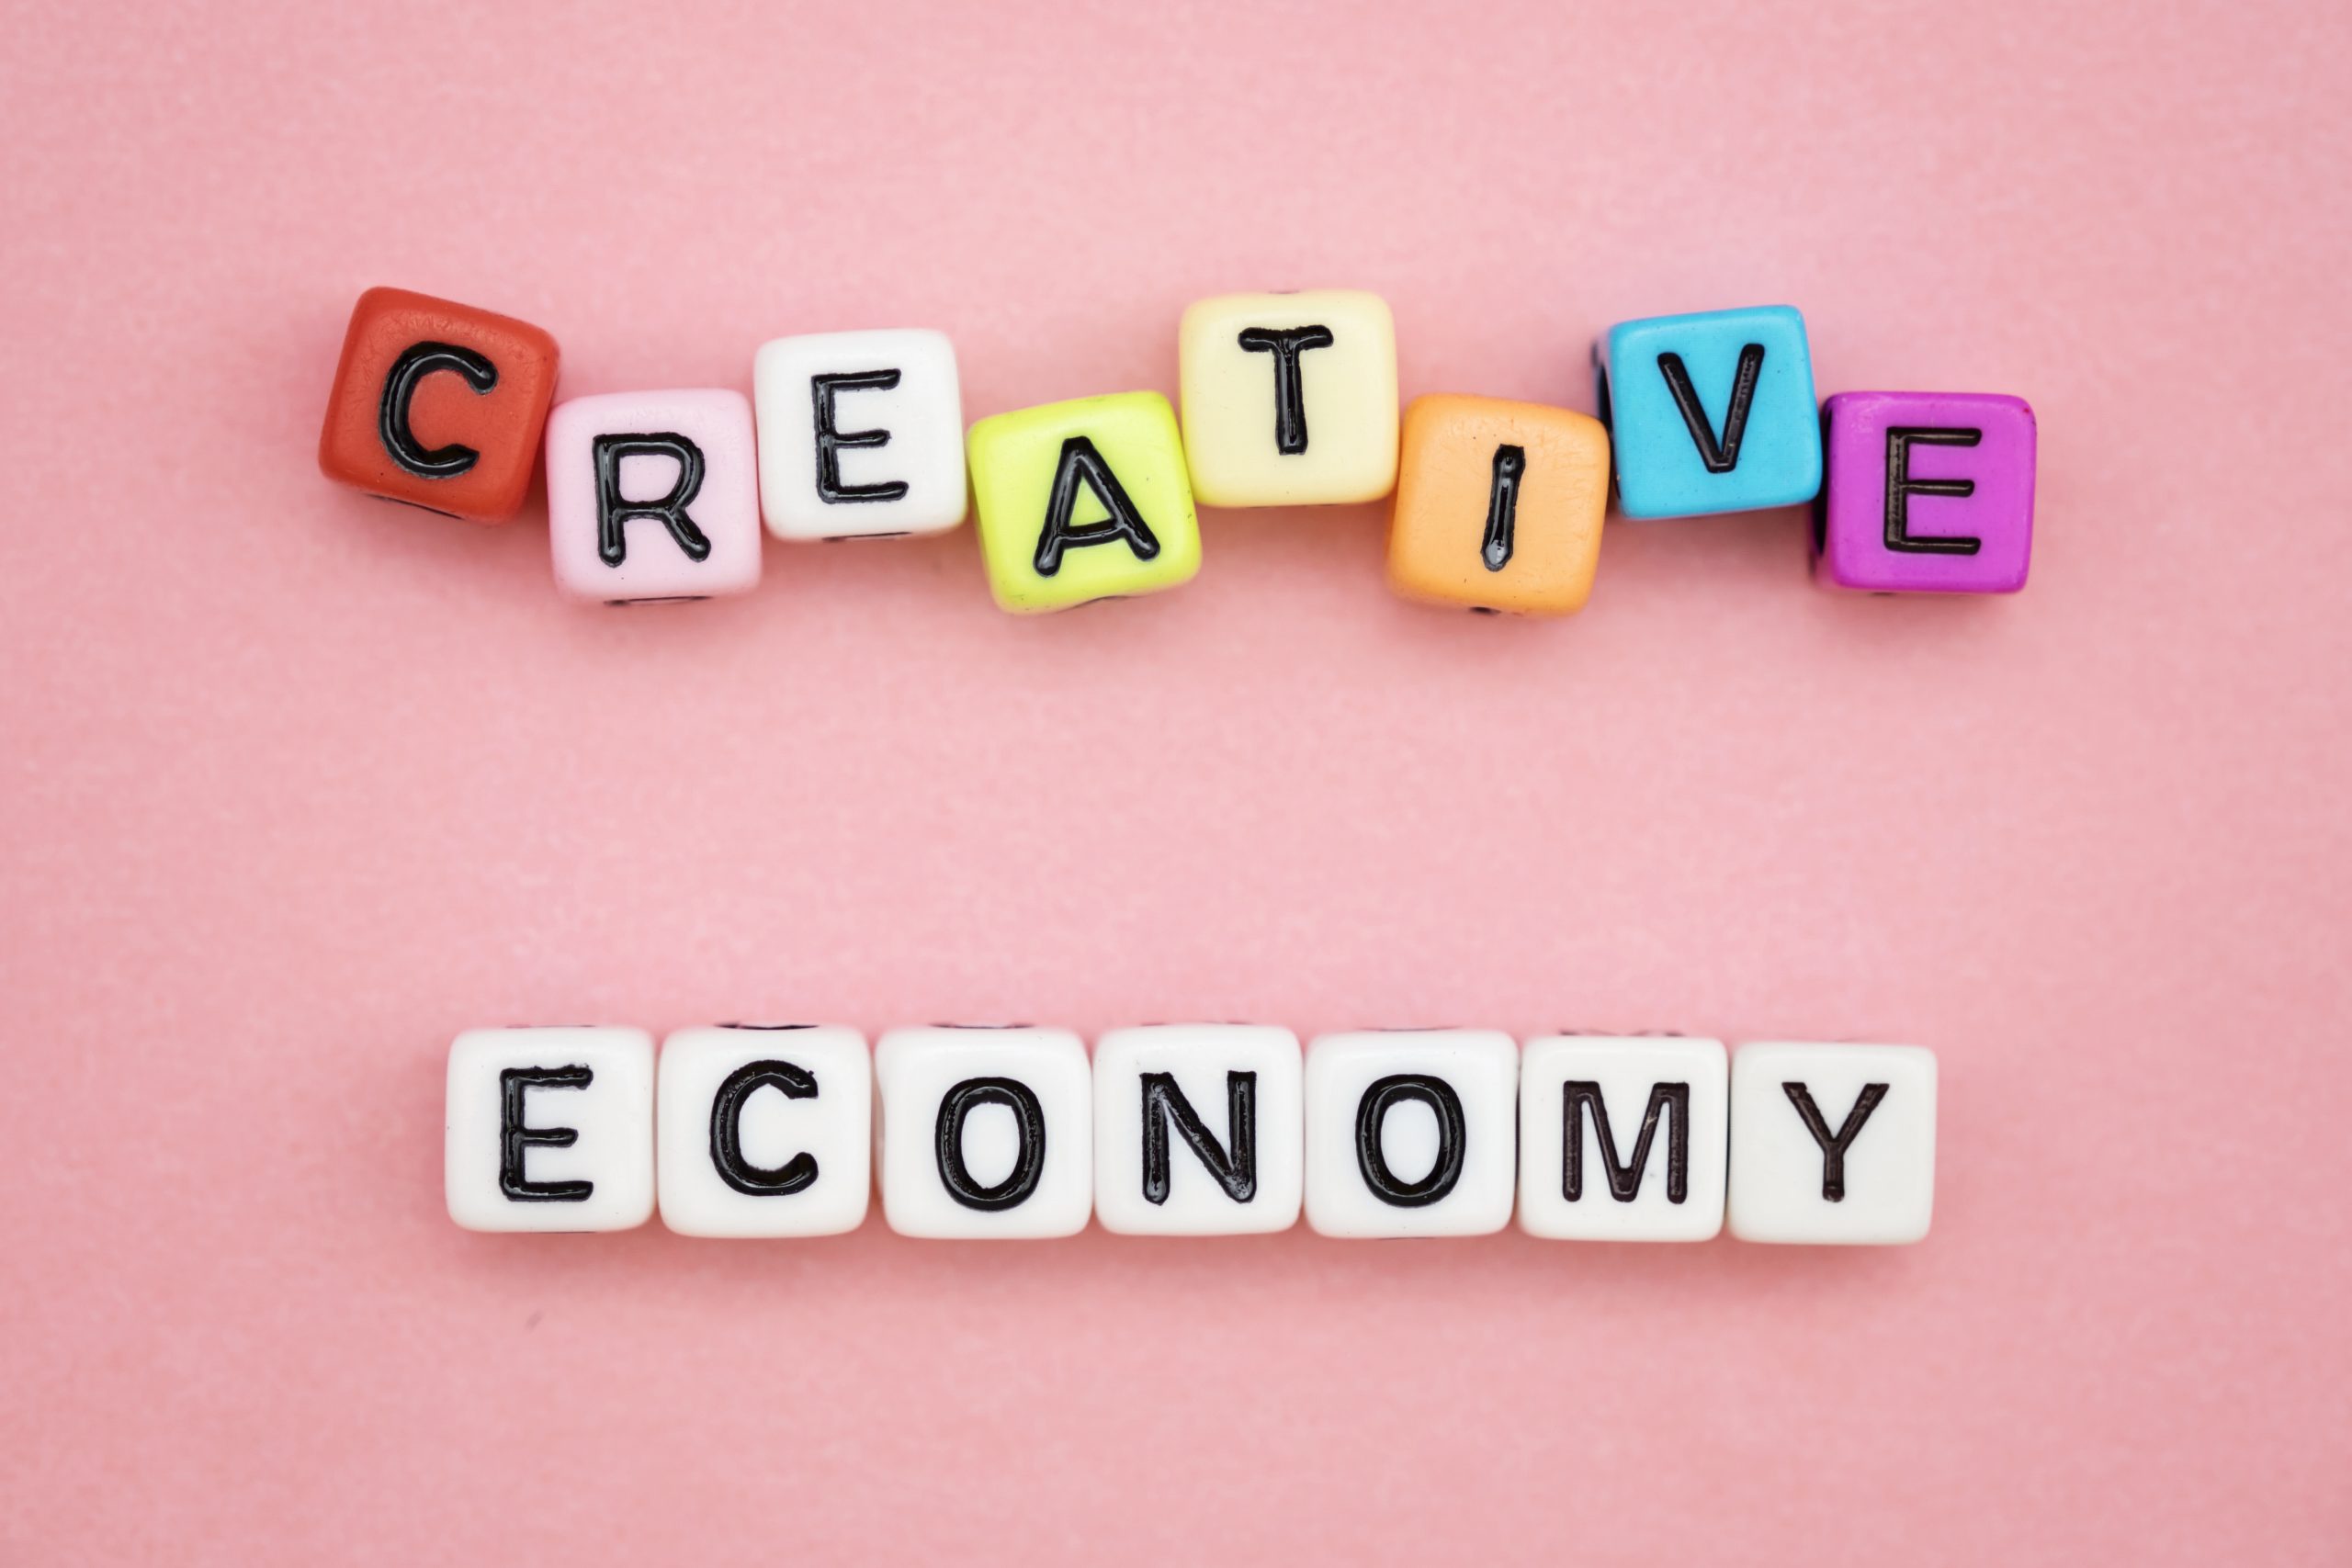 creative economy research